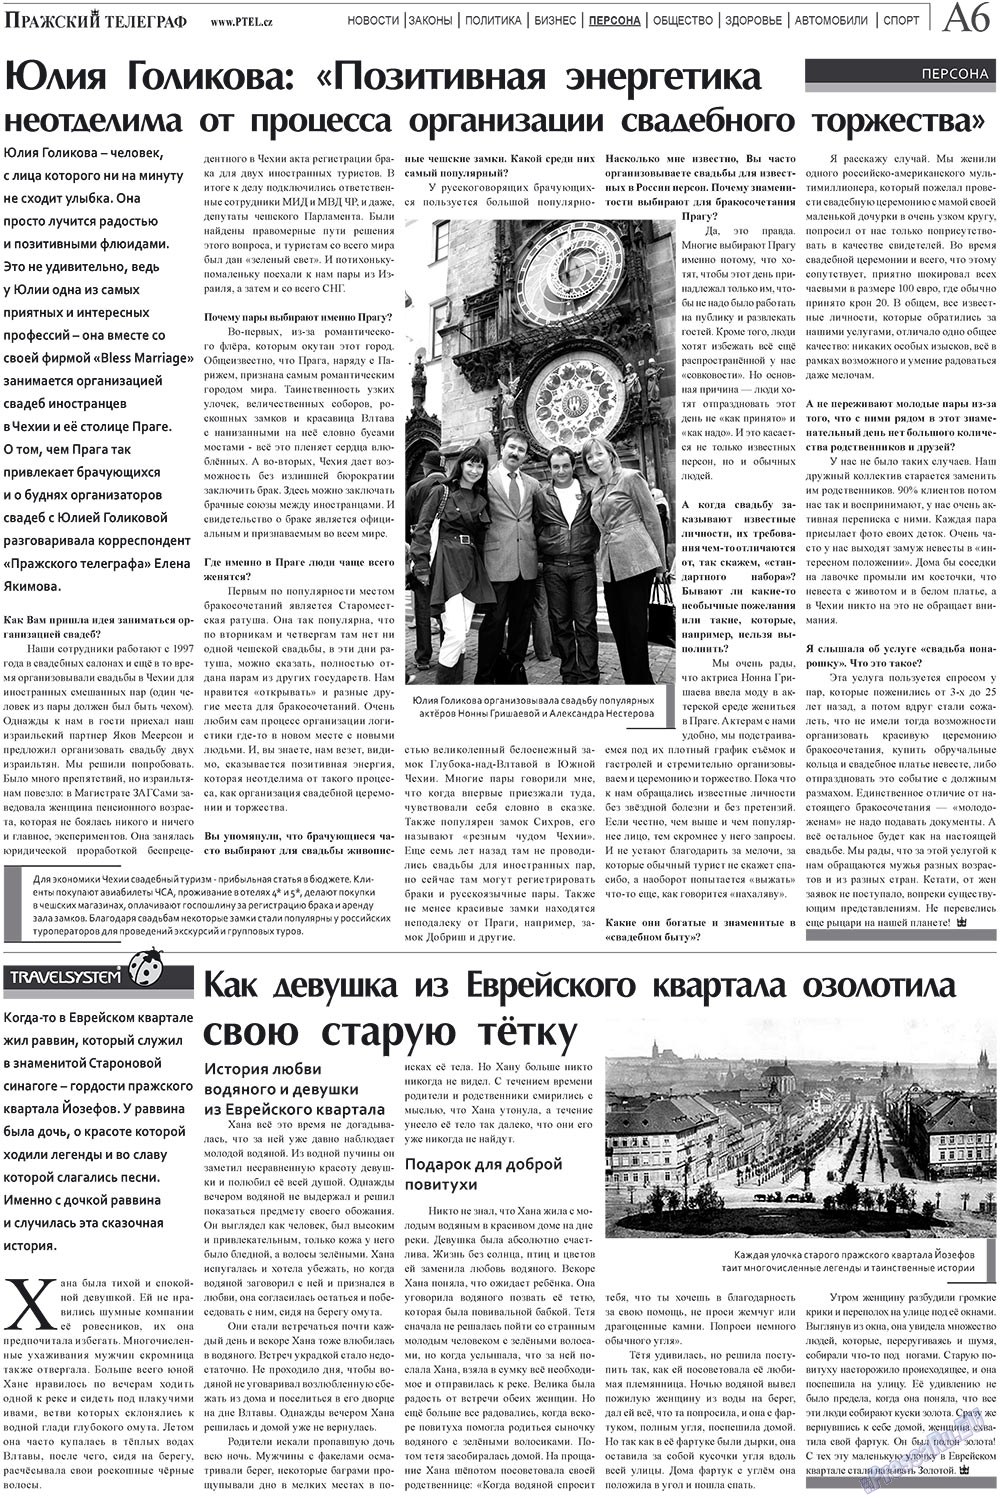 Пражский телеграф, газета. 2009 №36 стр.6